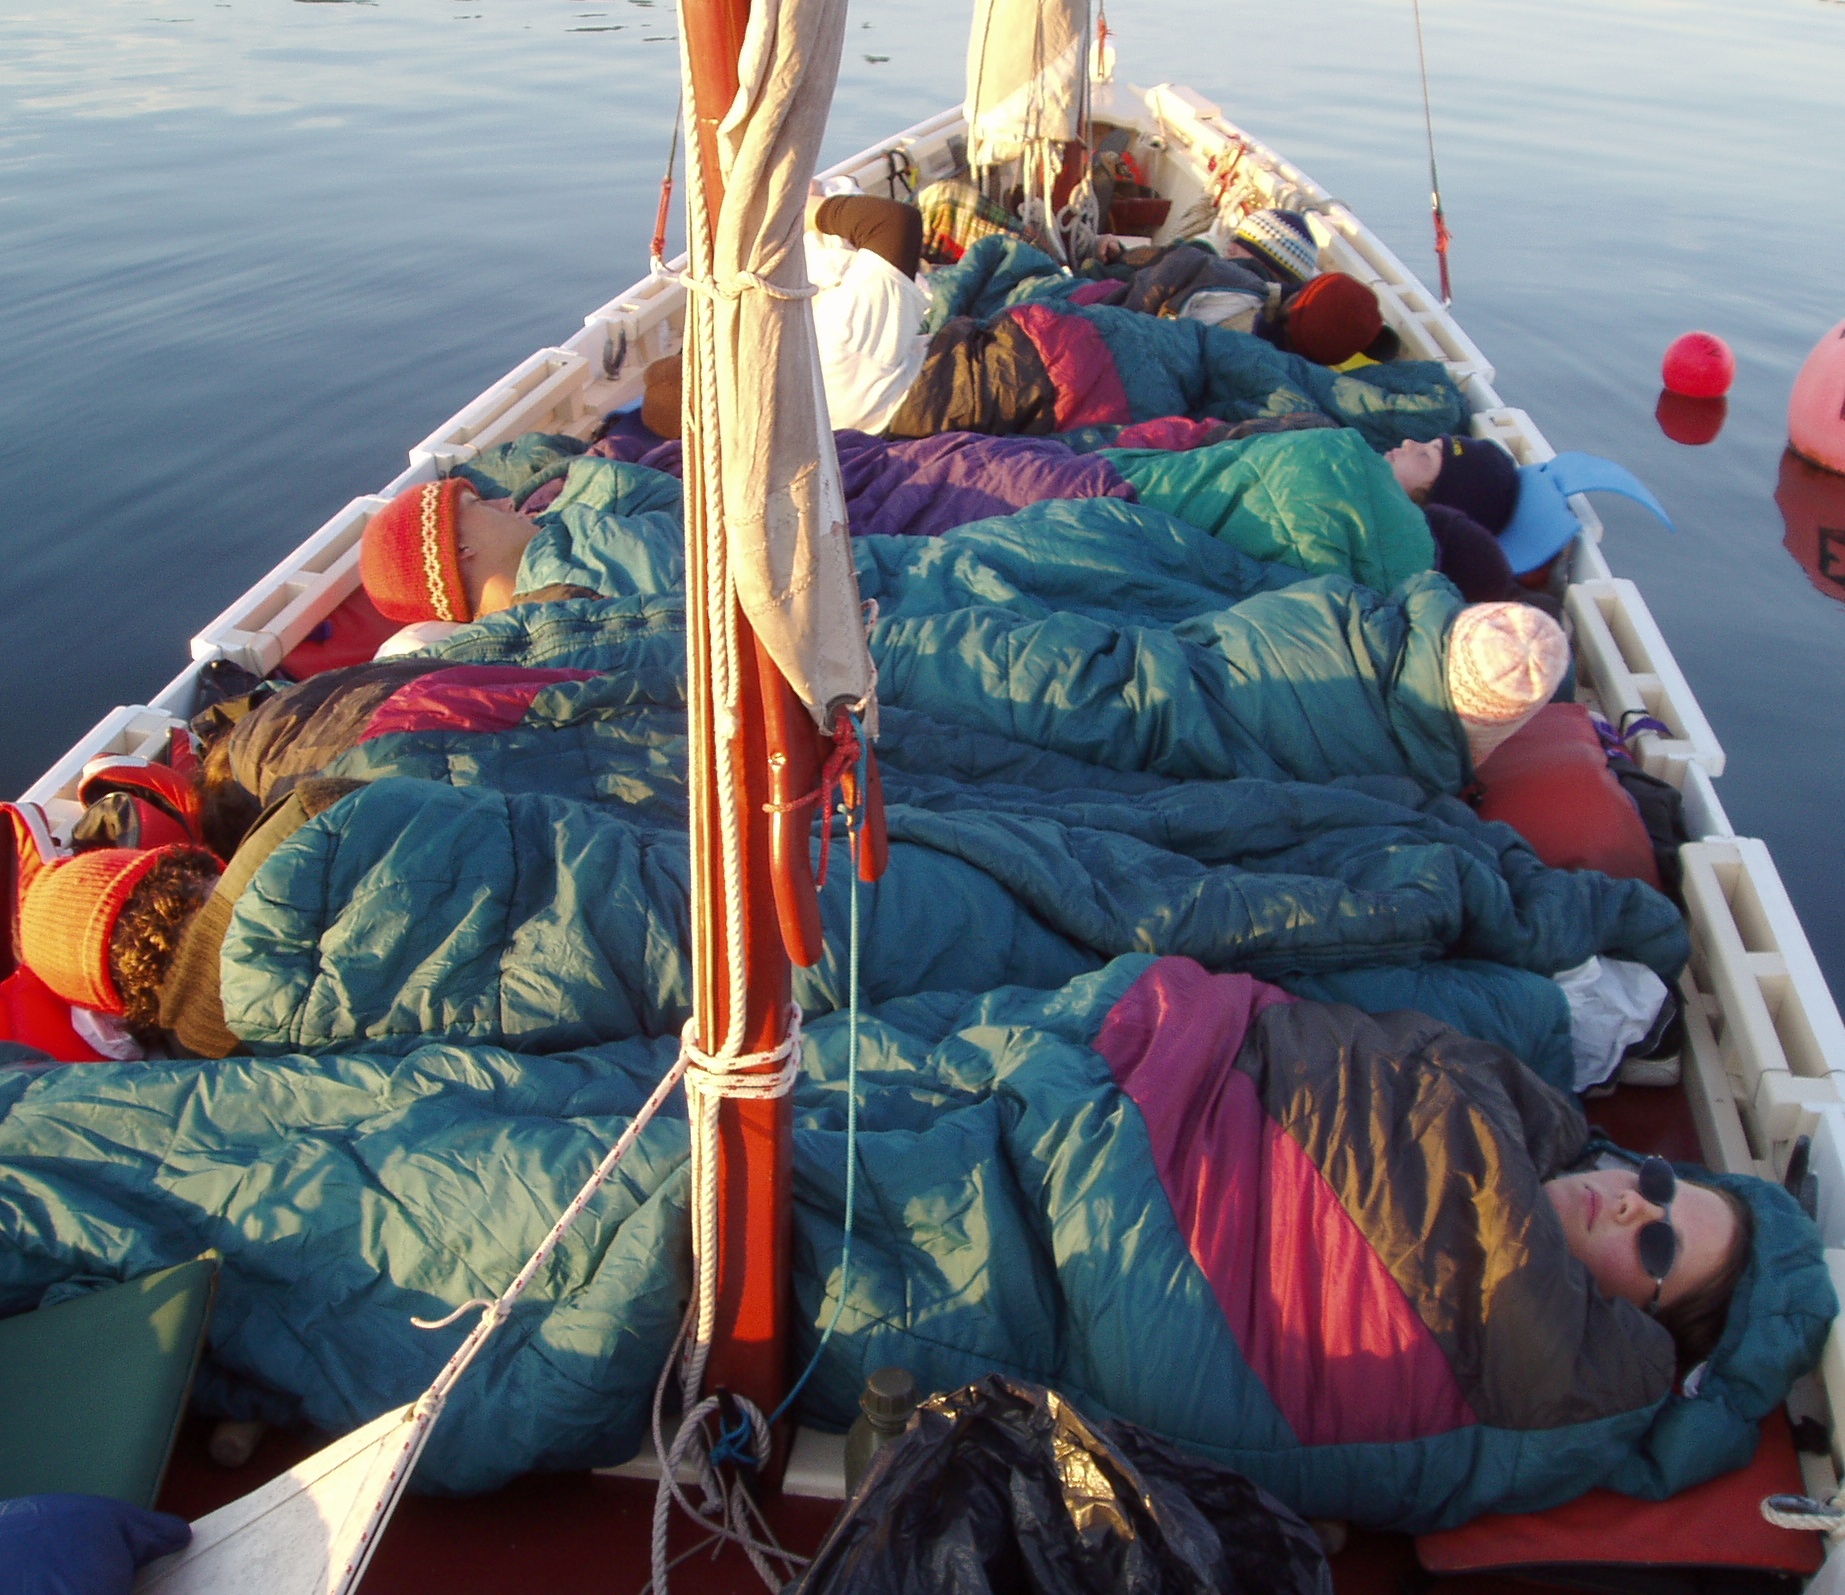 Sleeping on the Oars